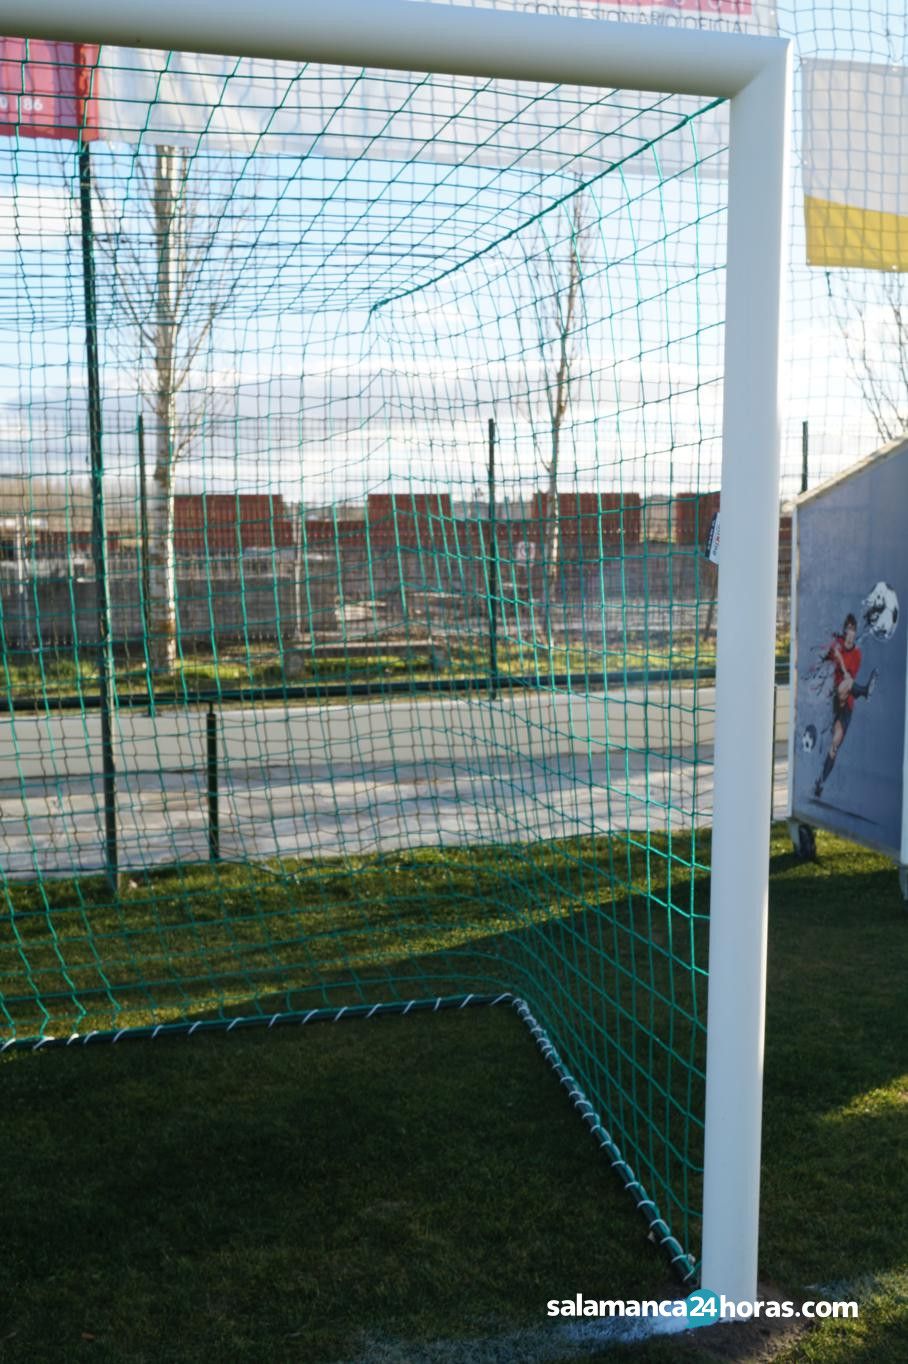  Campo de fútbol Alba de Tormes (16) 